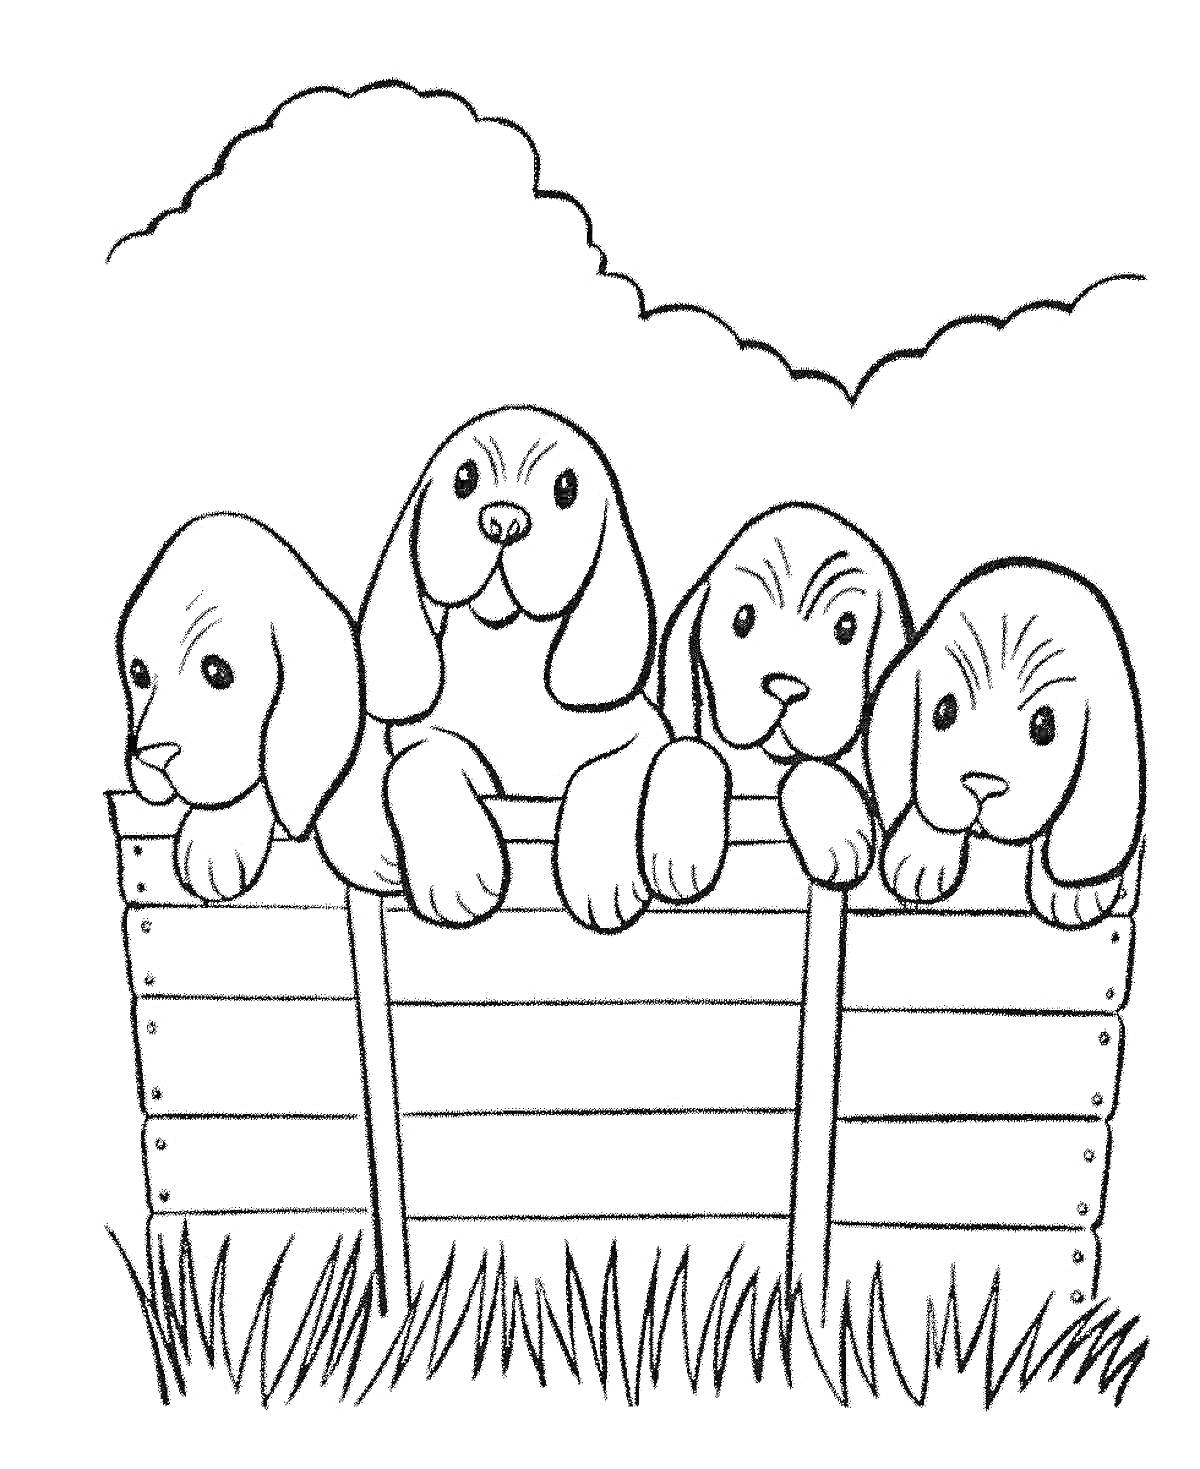 четыре щенка в заборчике на фоне облаков